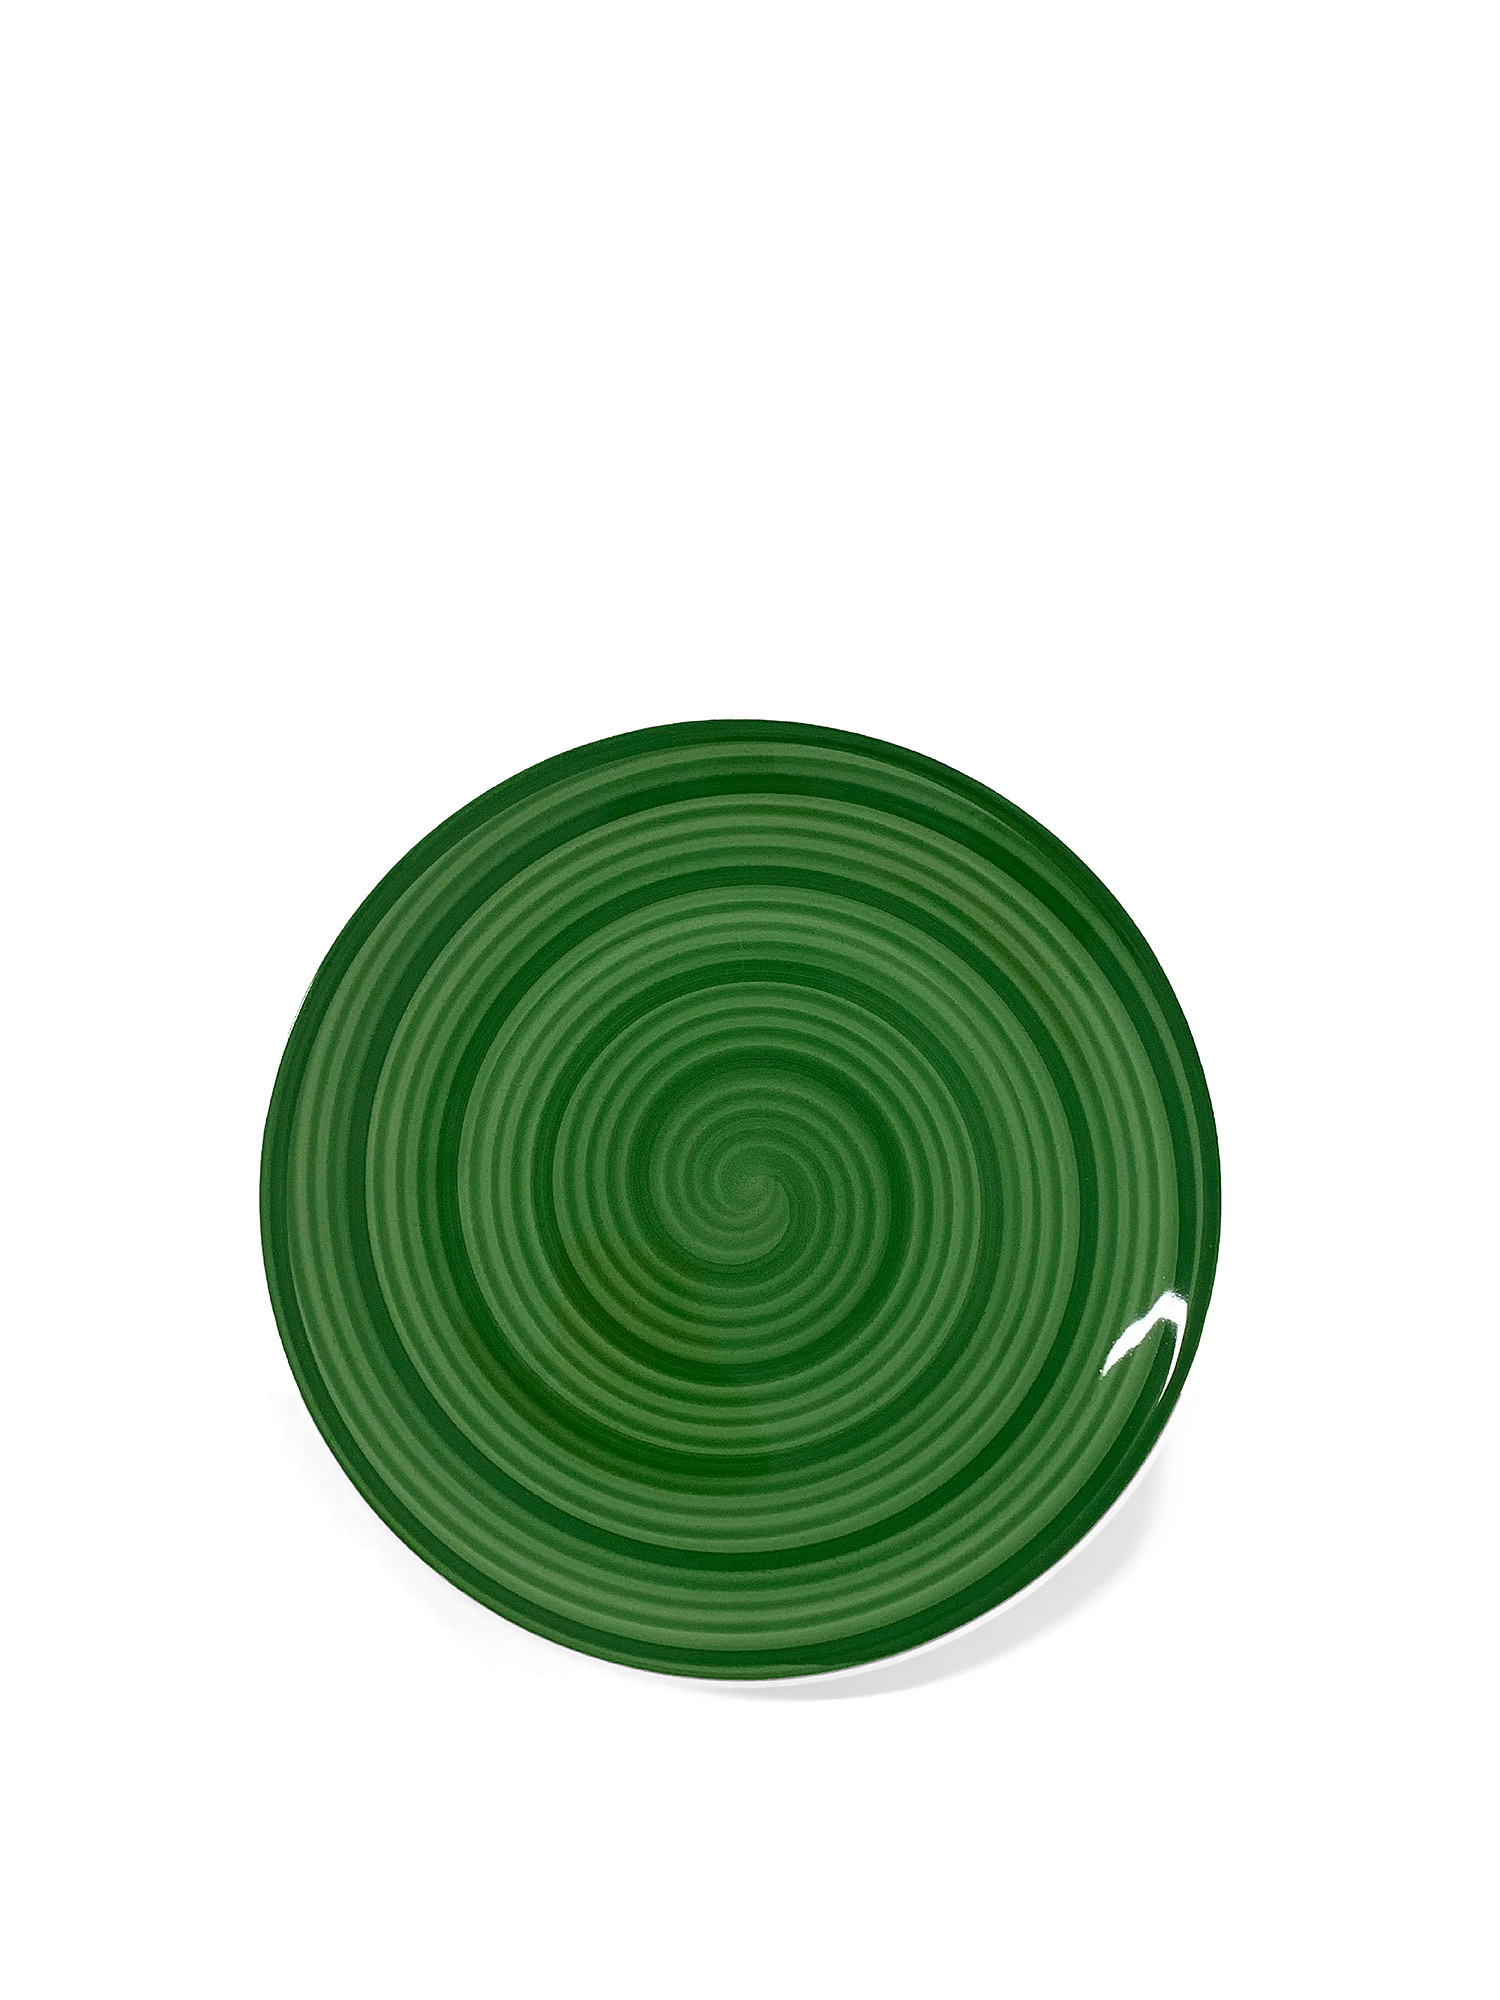 Piatto piano ceramica dipinta a mano Spirale, Verde, large image number 0